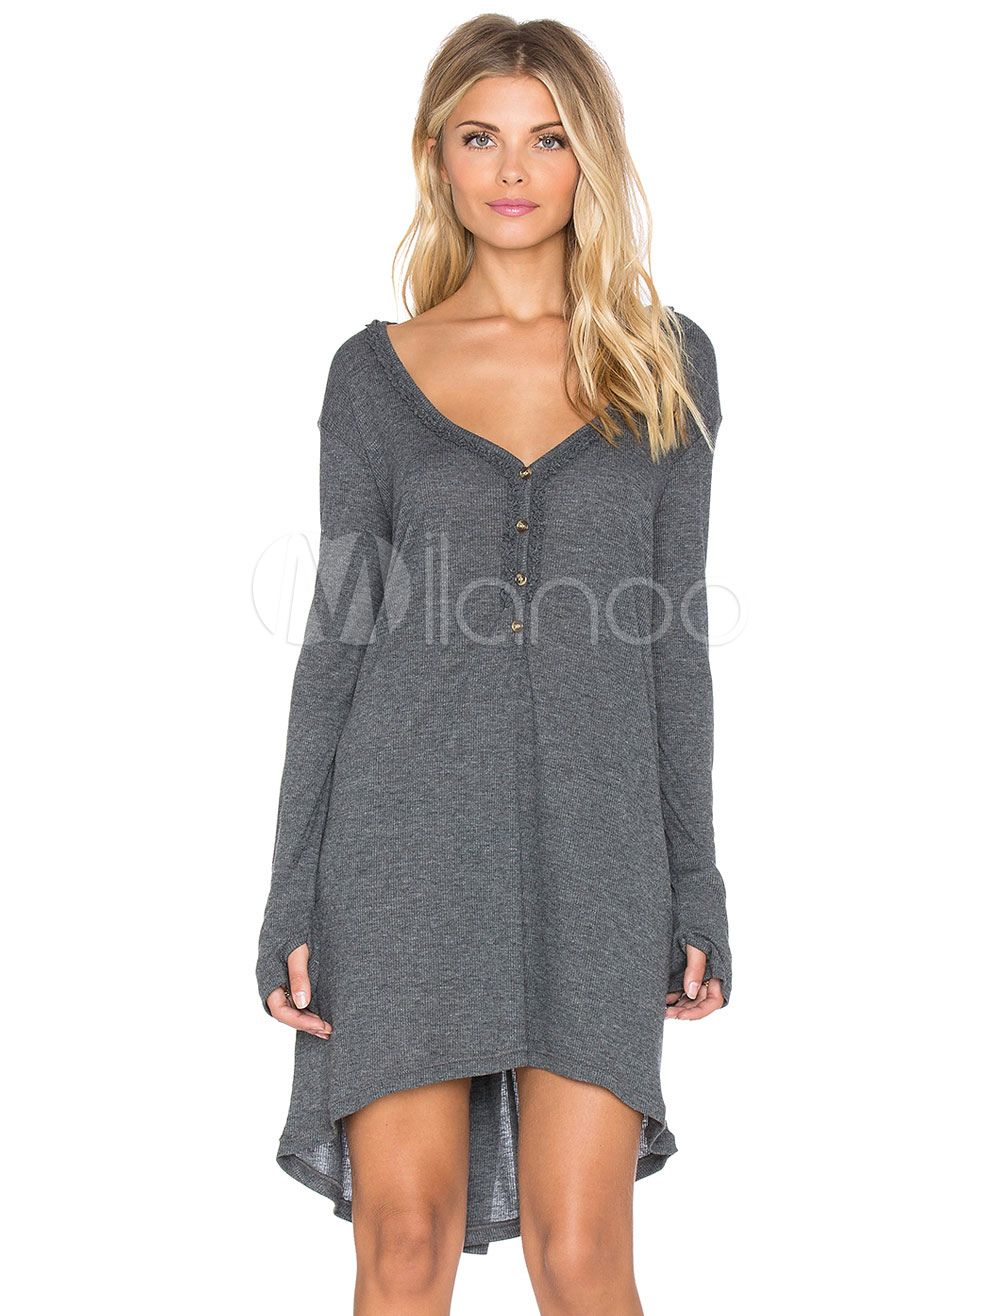 Grey Knitted Dress V Neck Long Sleeve High Low Buttons Decor Women's Casual Dress | Milanoo